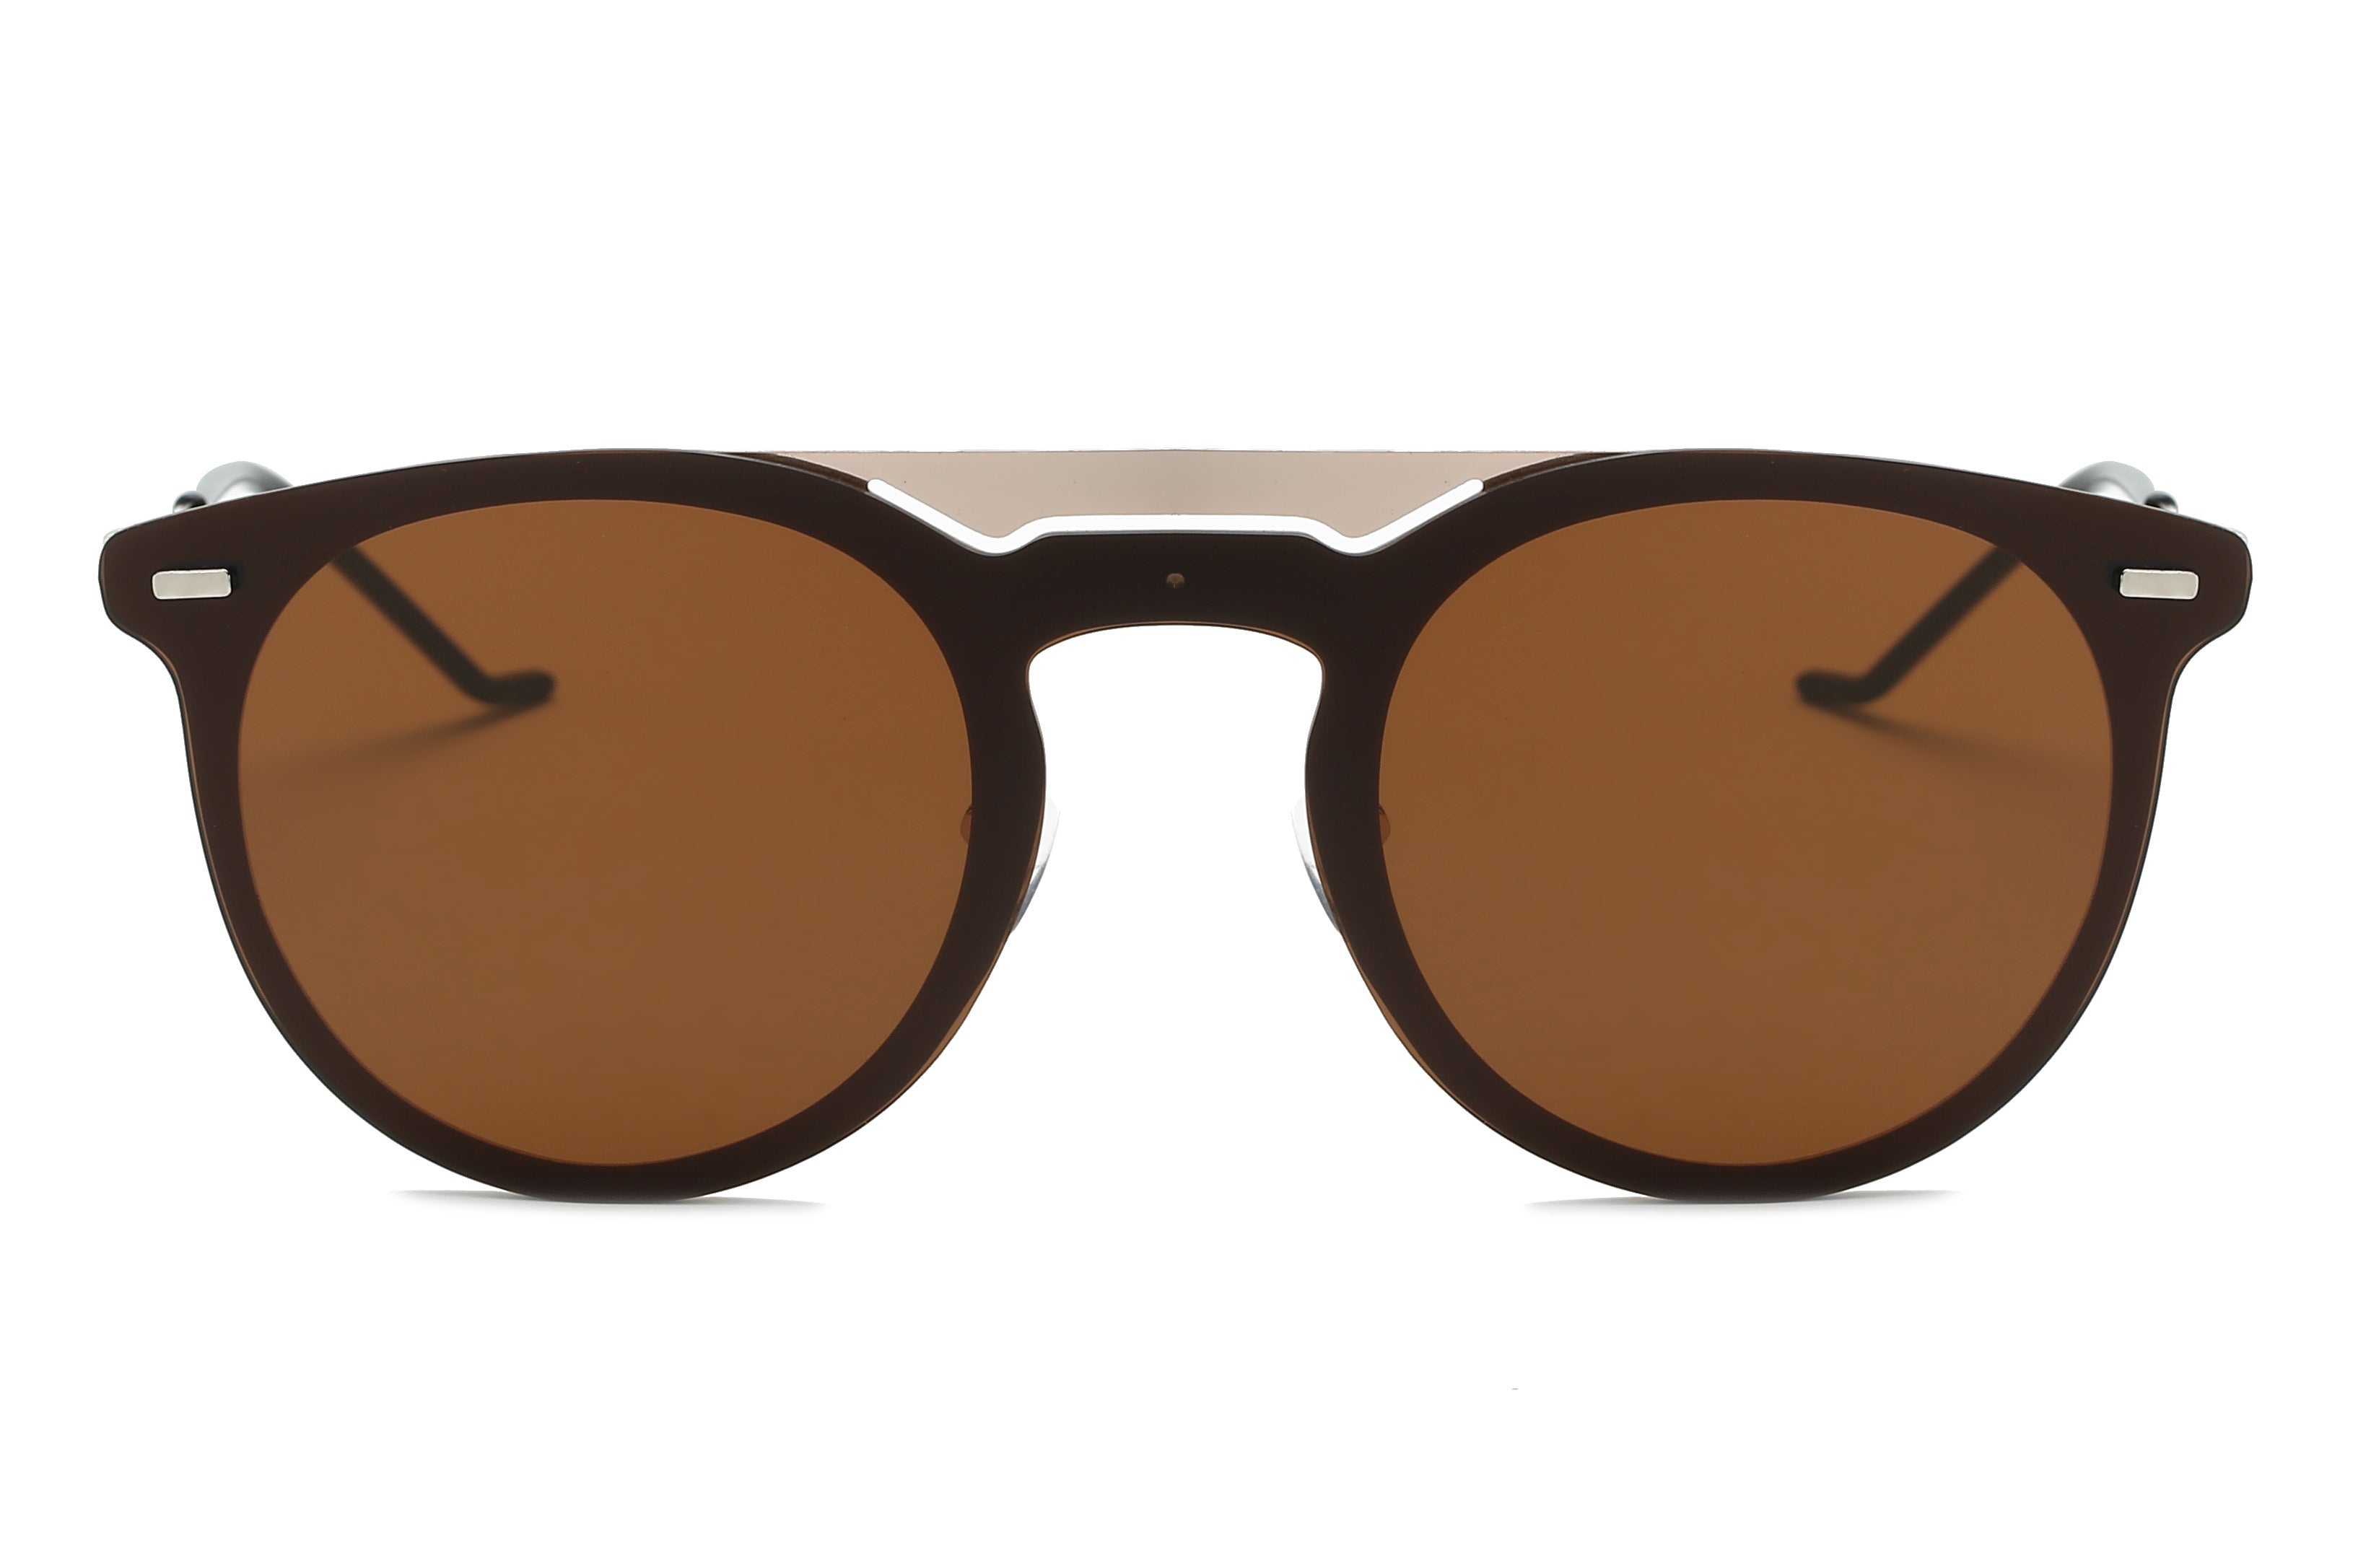 S3010 - Retro Mirrored Circle Round Sunglasses Assorted/Mixed